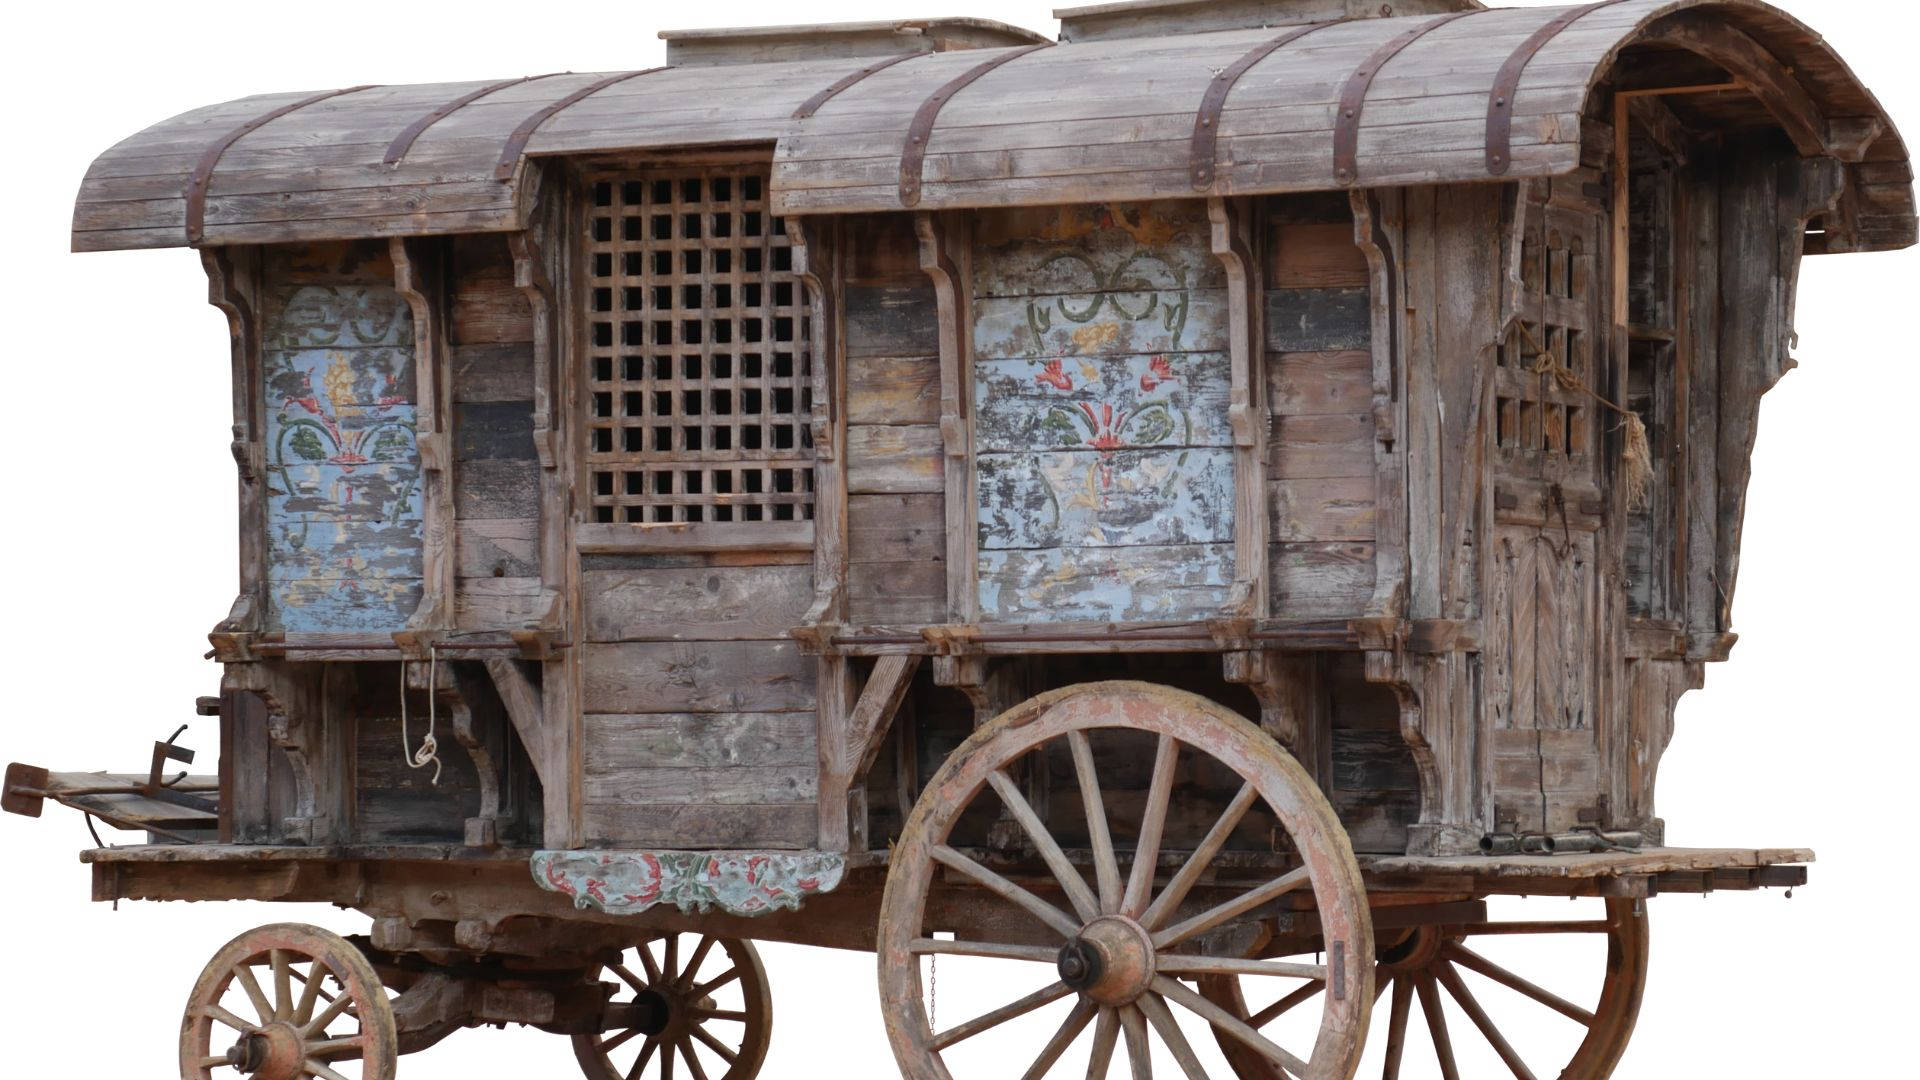 A Medieval Caravan Background